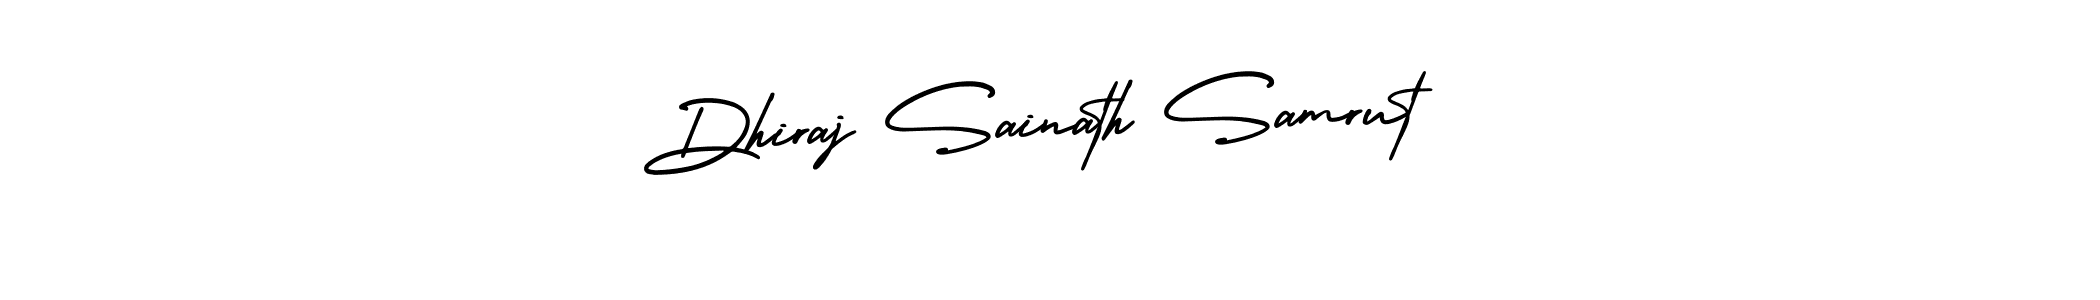 How to Draw Dhiraj Sainath Samrut signature style? AmerikaSignatureDemo-Regular is a latest design signature styles for name Dhiraj Sainath Samrut. Dhiraj Sainath Samrut signature style 3 images and pictures png